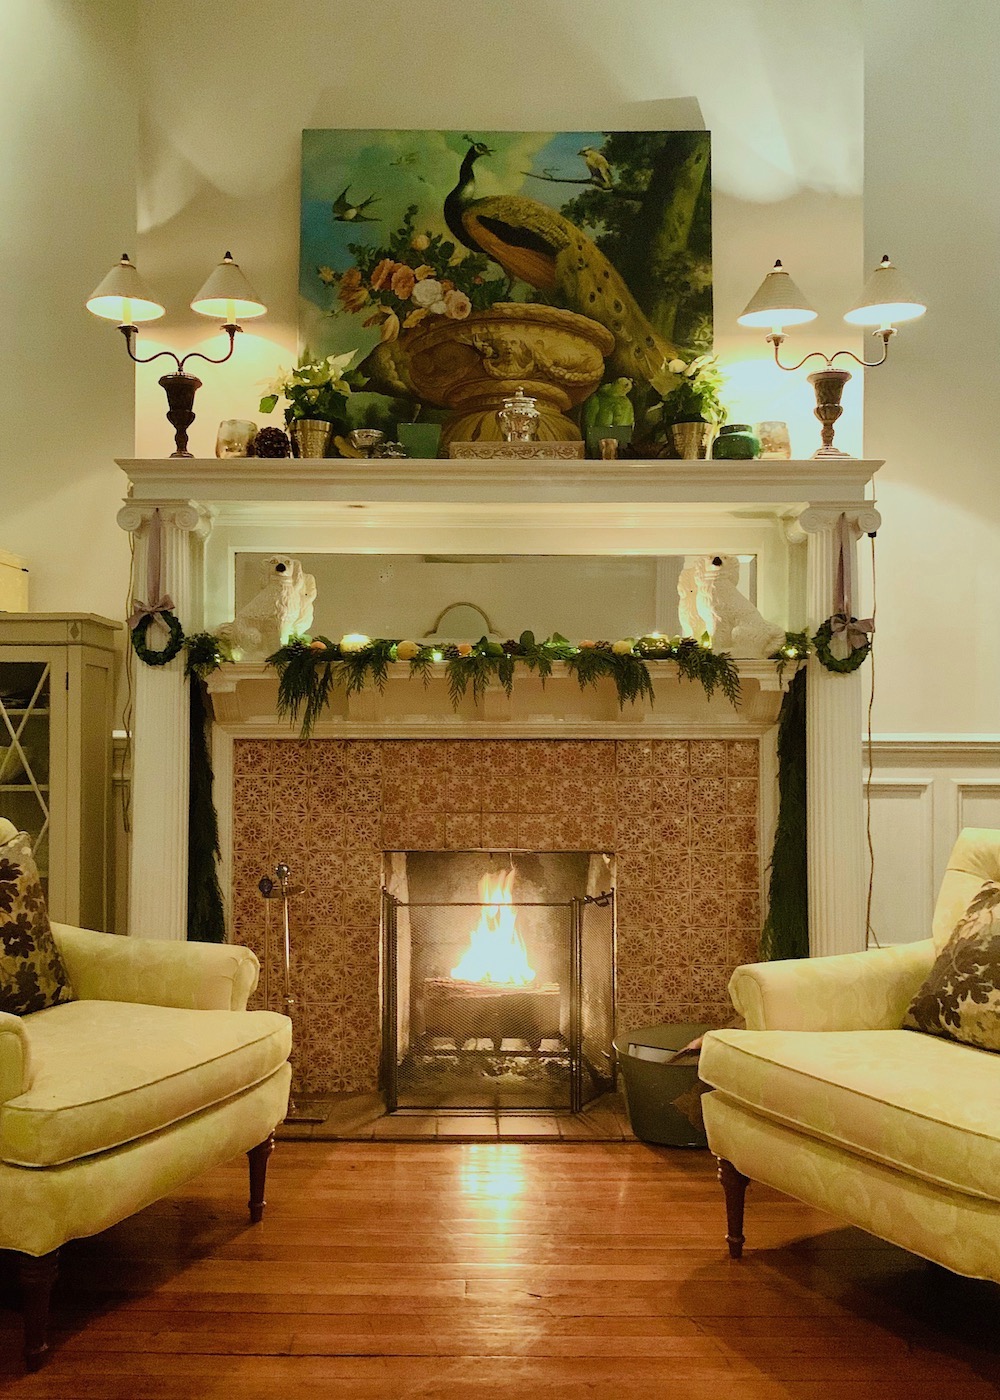 Christmas holiday fireplace mantel - roaring fire